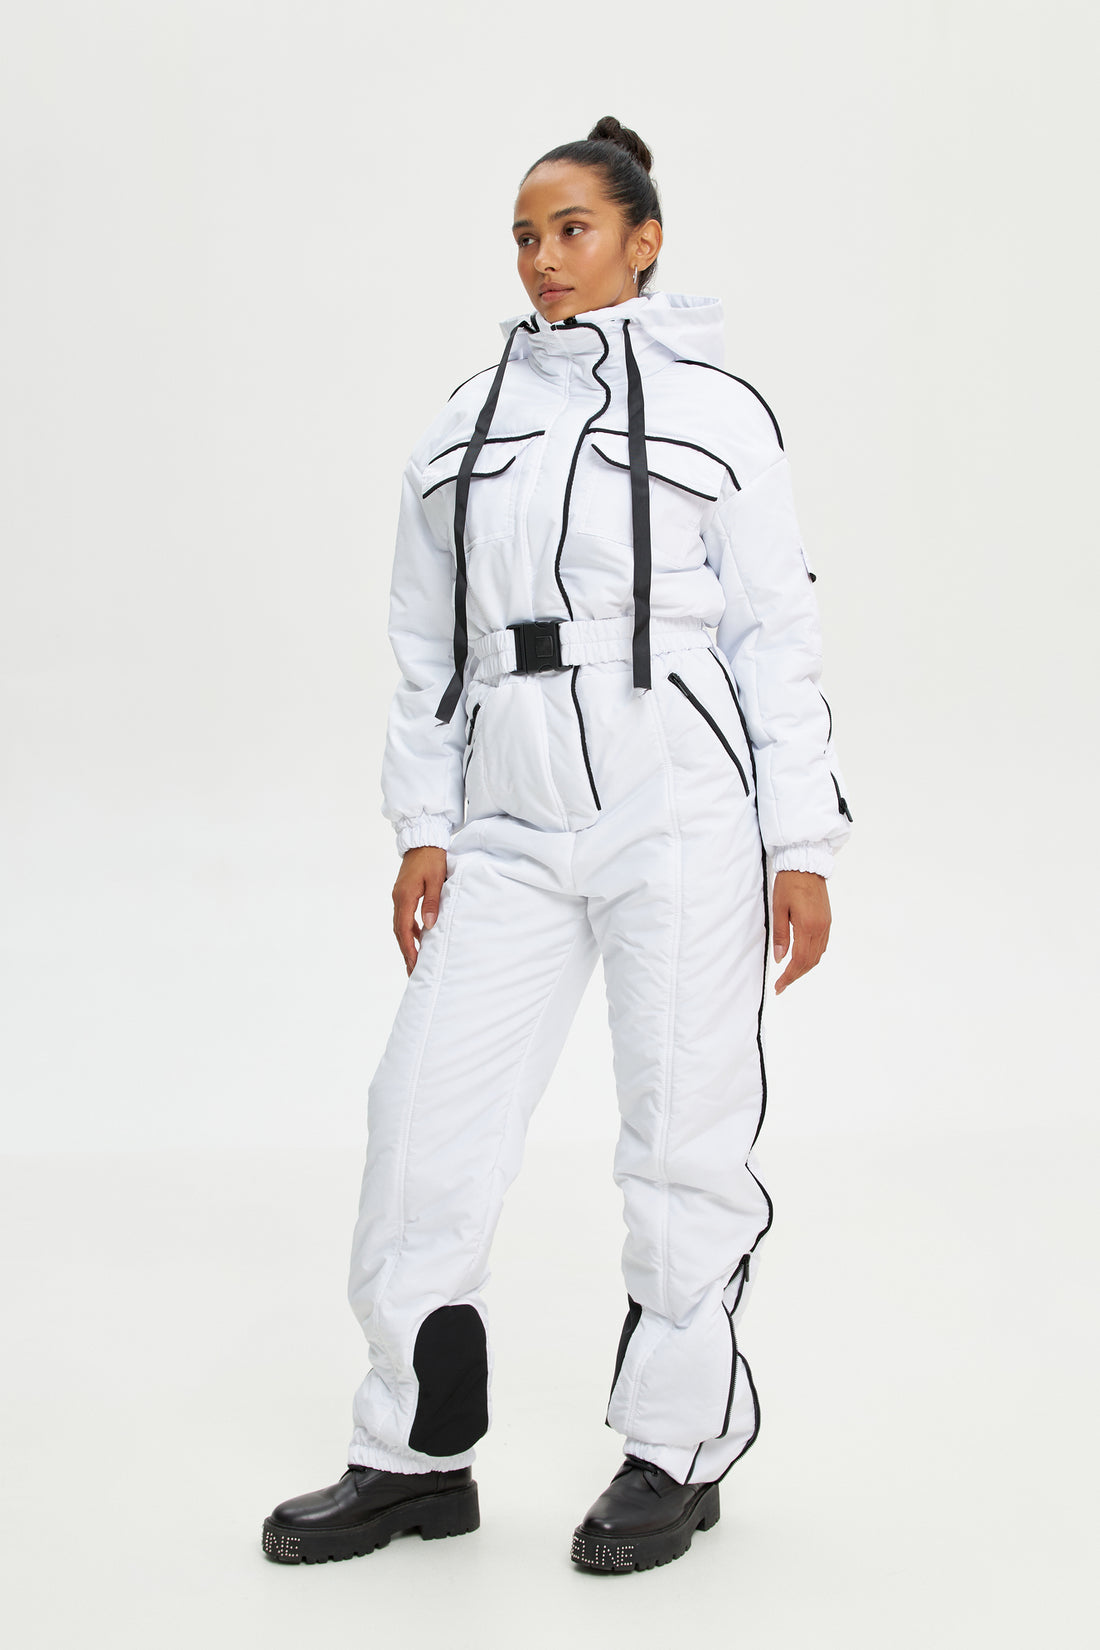 White ski suit BLANC - WHITE with black edging - Ladies ski wear snowsuit